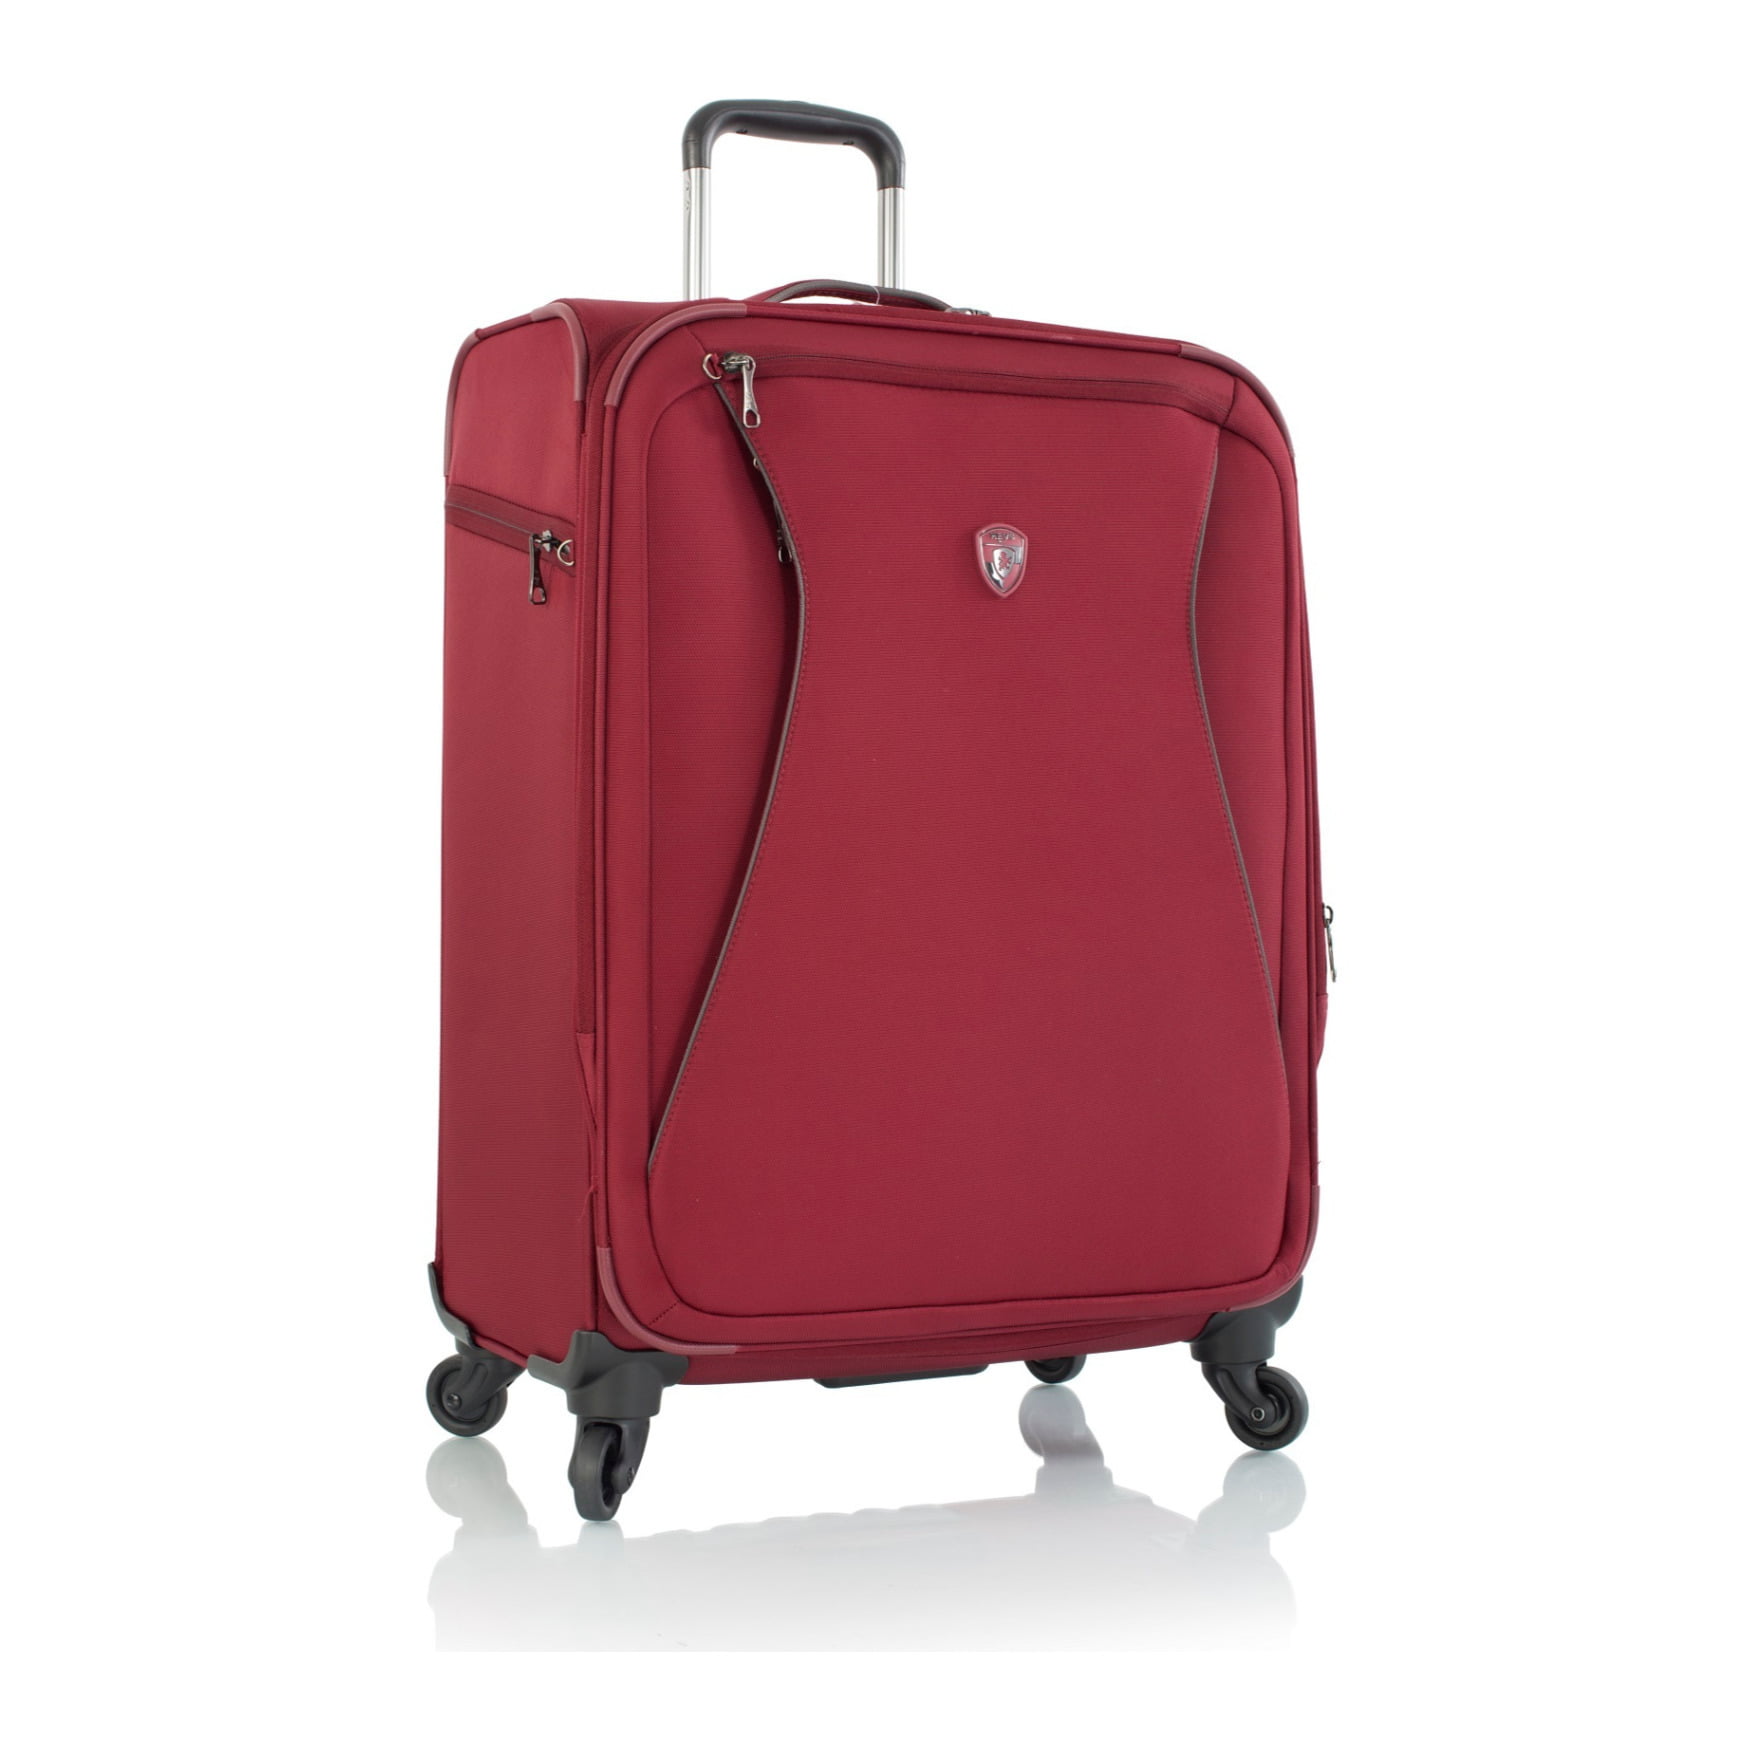 Heys America Helix 26-Inch Softside Spinner Luggage (Red) - Walmart.com